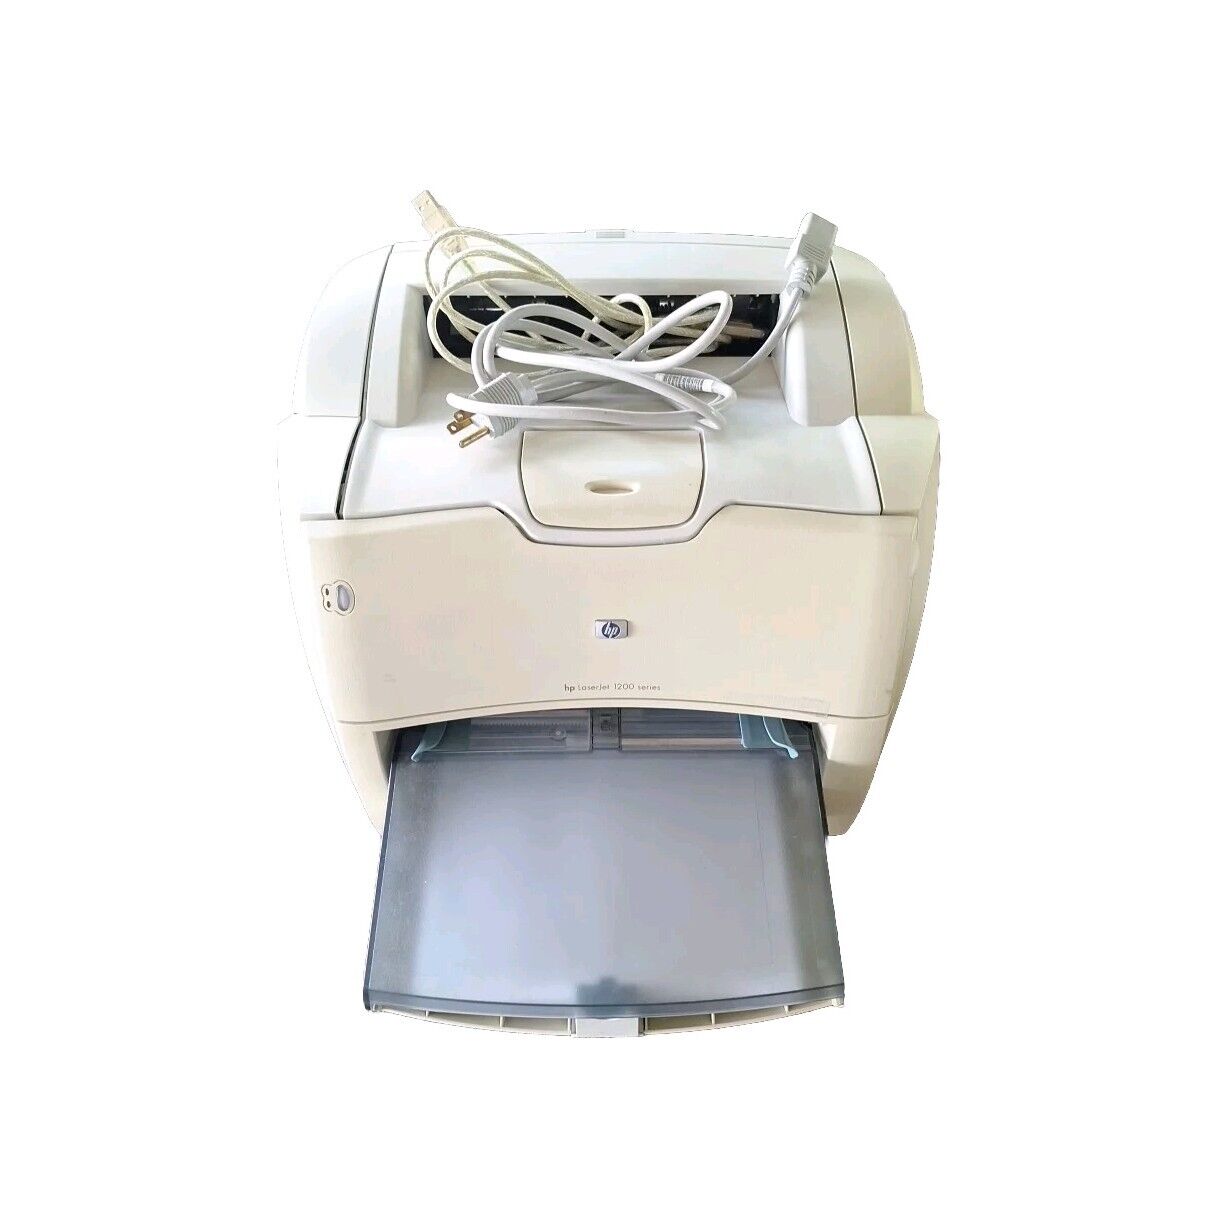 HP LaserJet 1200 Workgroup Laser Printer Tested Working